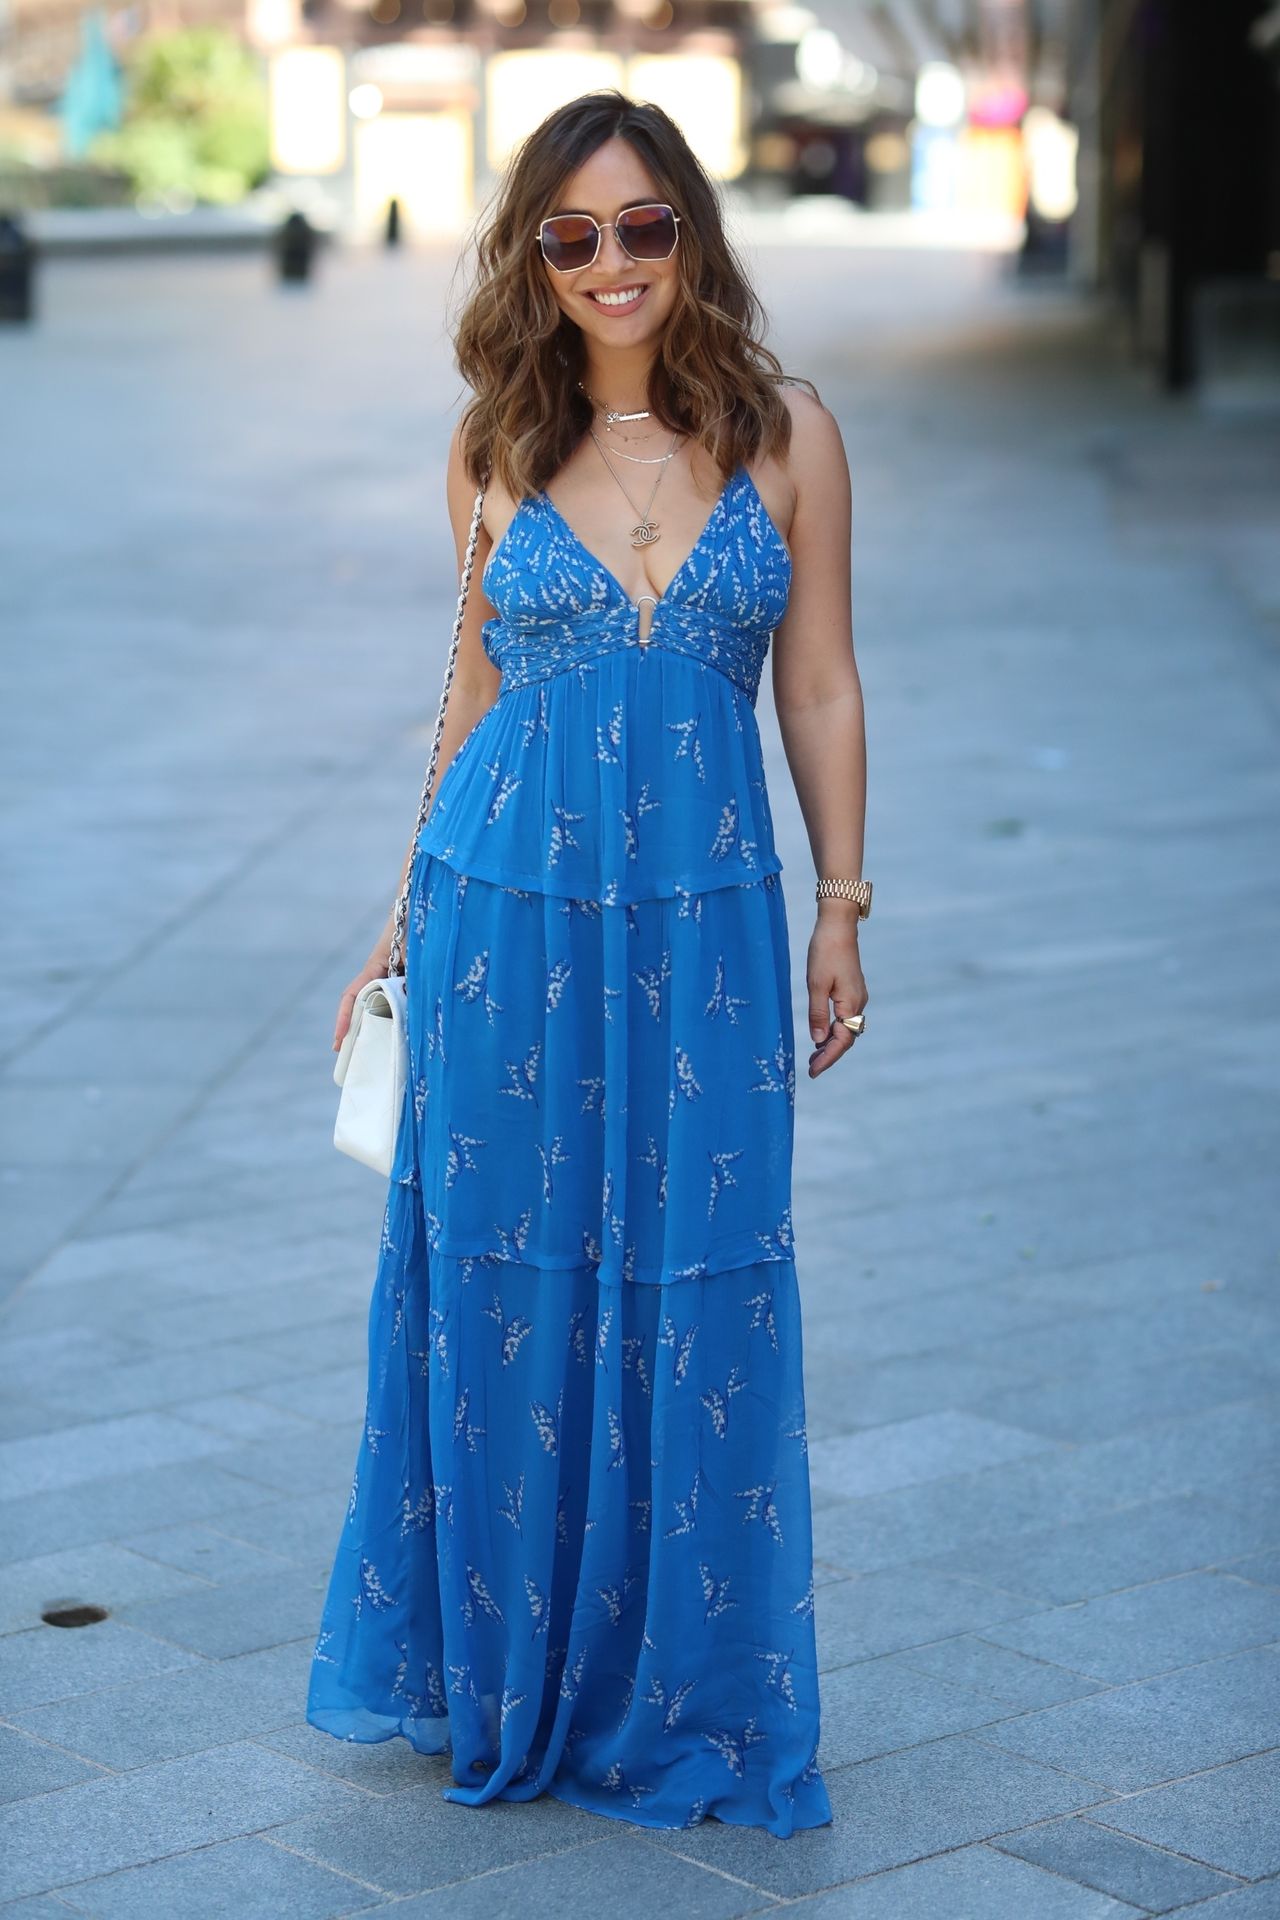 Myleene Klass Stuns in a Blue Dress in London (46 Photos)